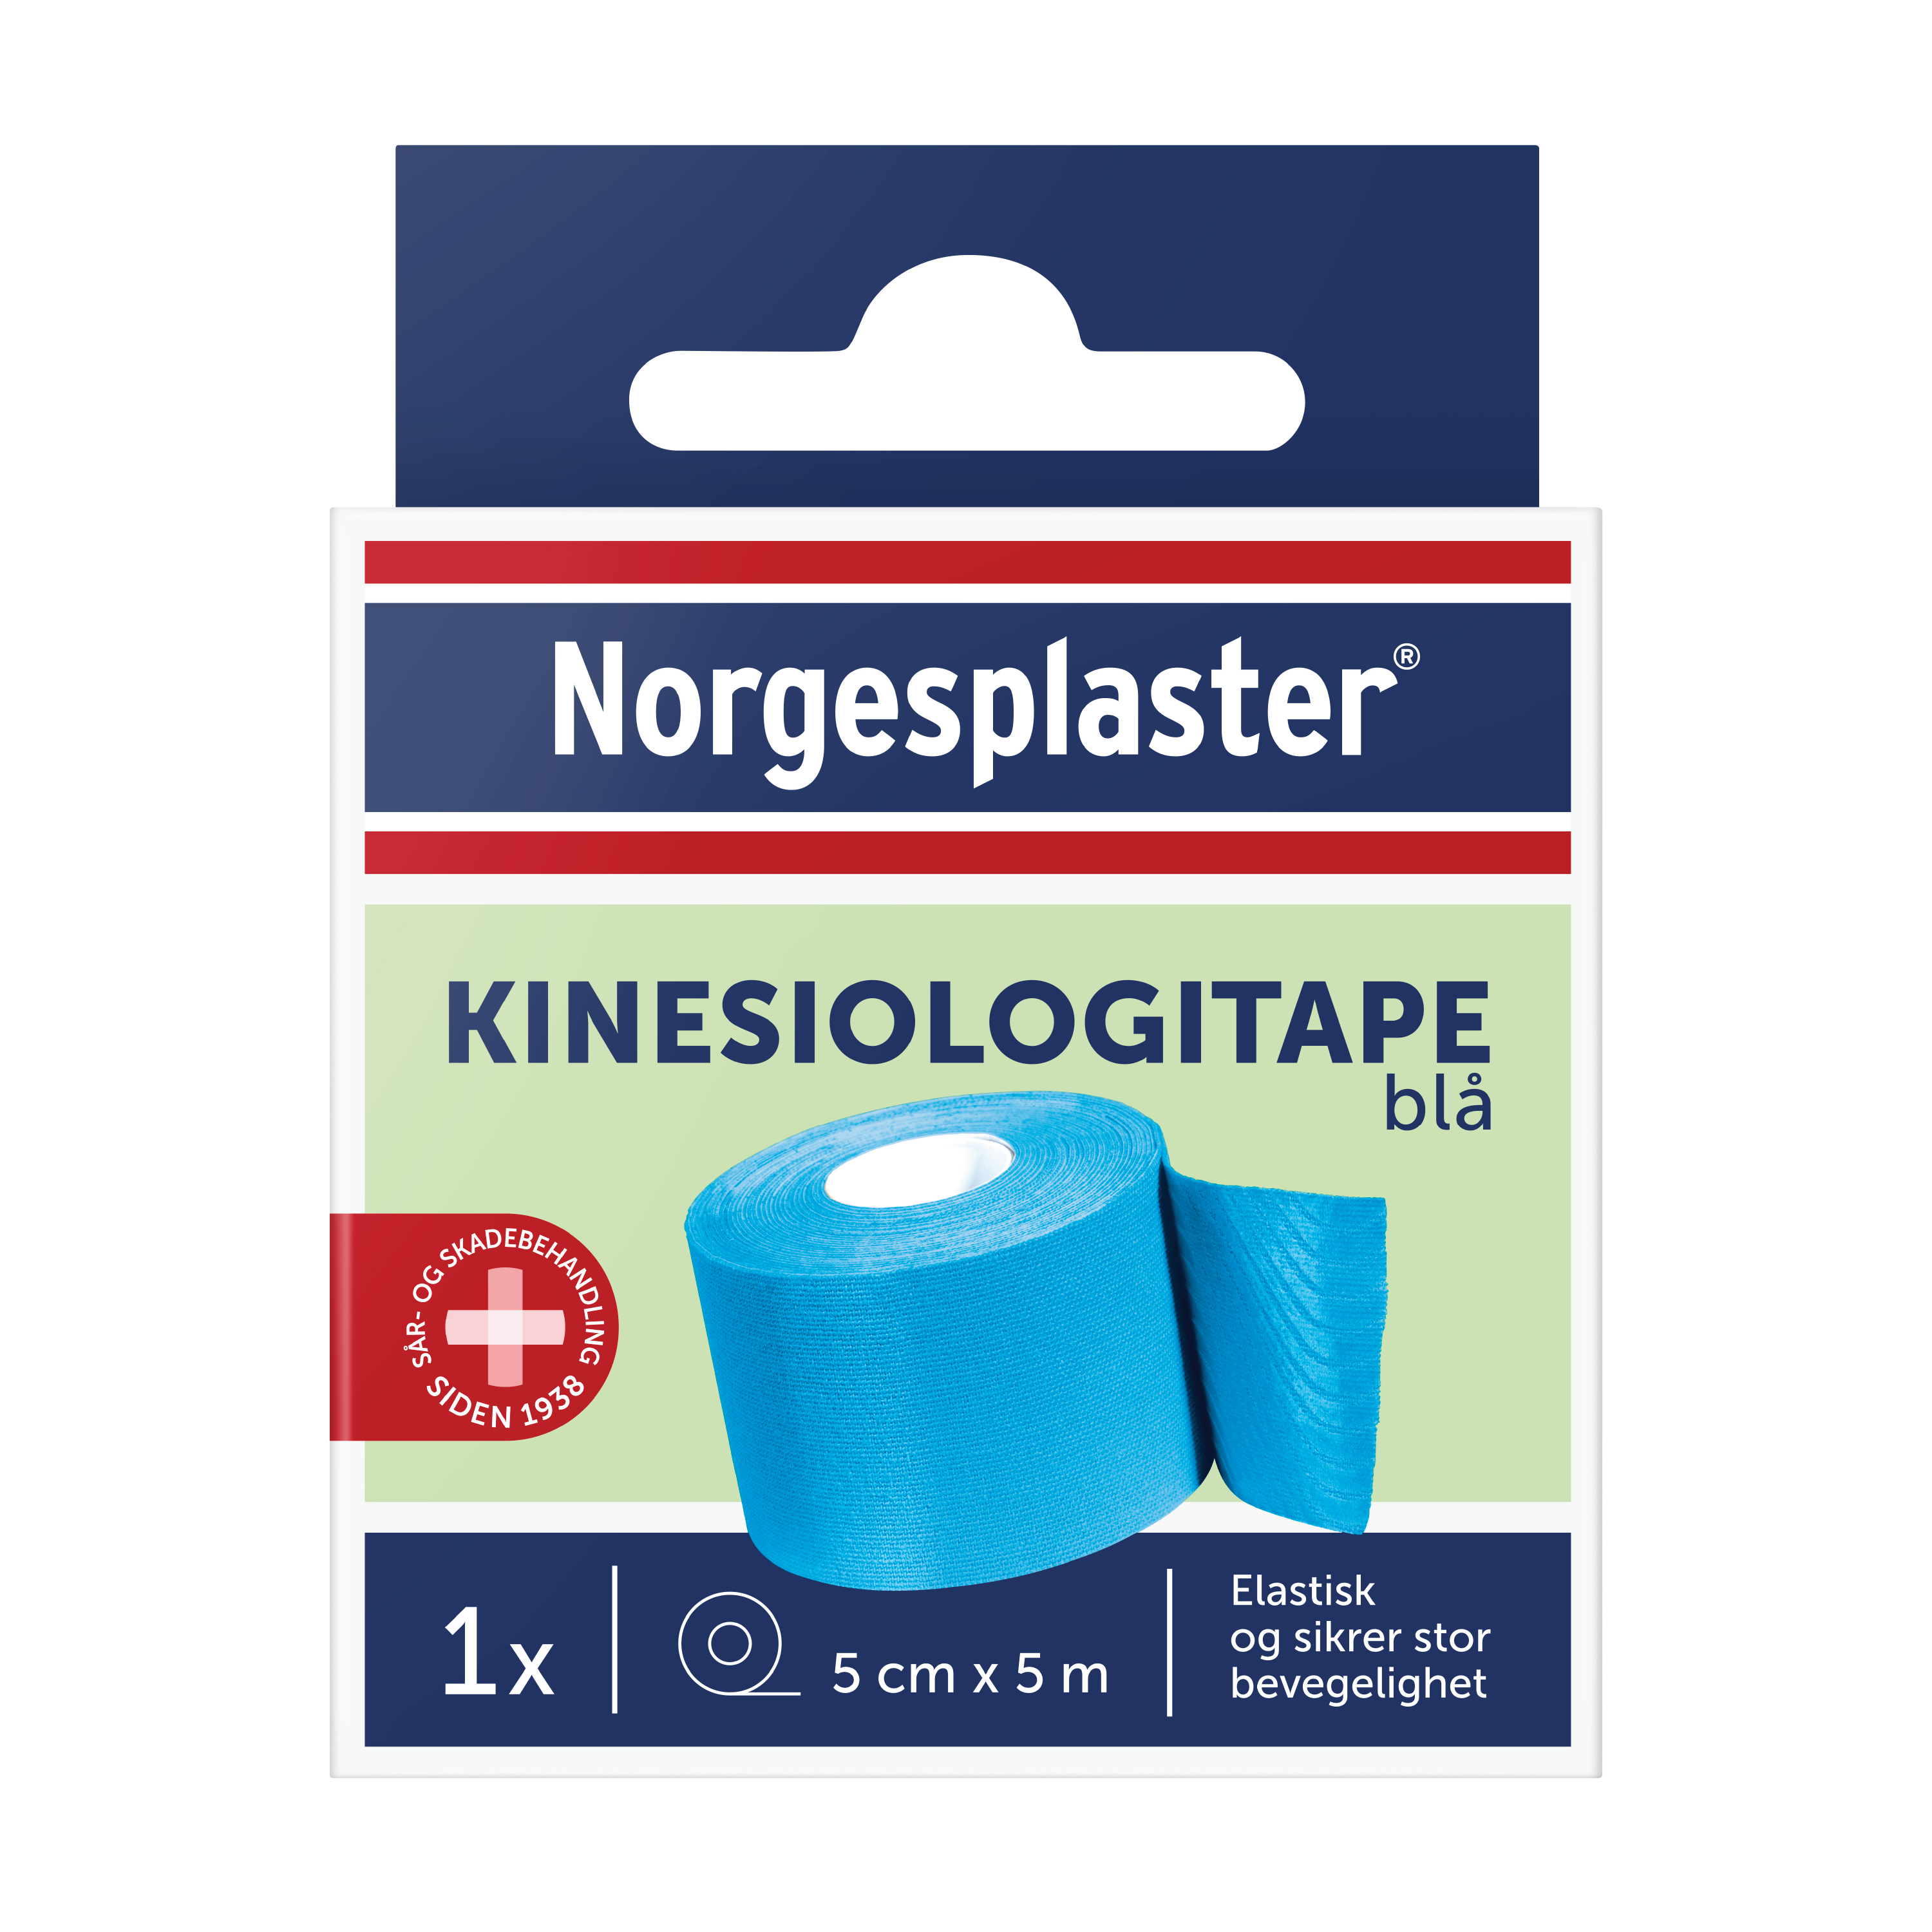 Norgesplaster Kinesiologitape 5cm x 5m, Blå, 1 stk.